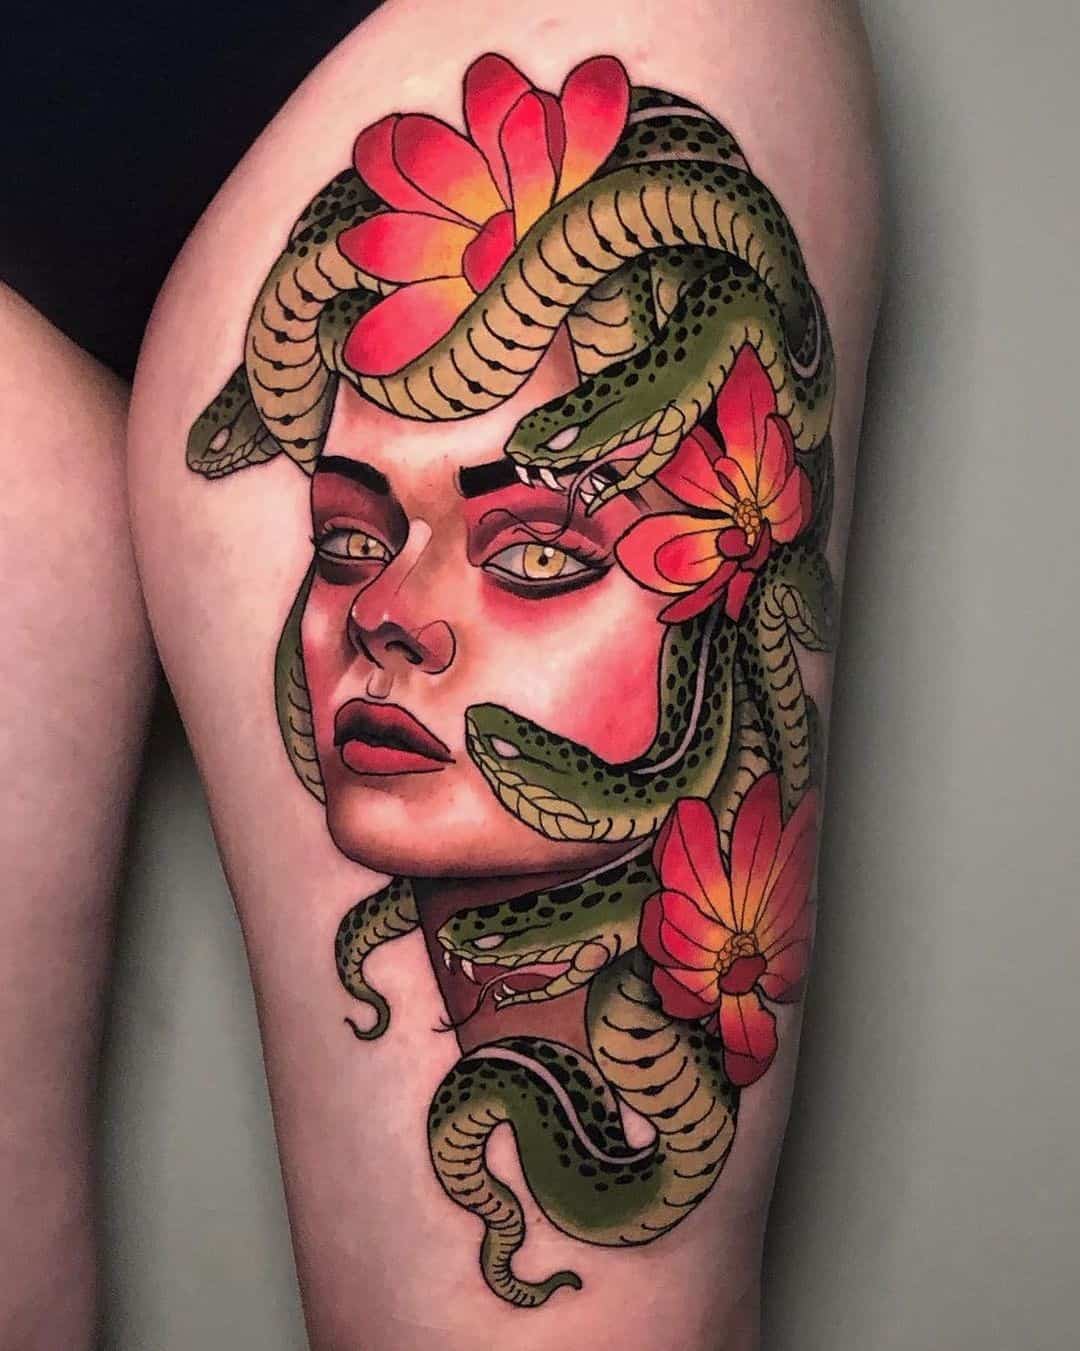 Other Medusa Tattoo Designs